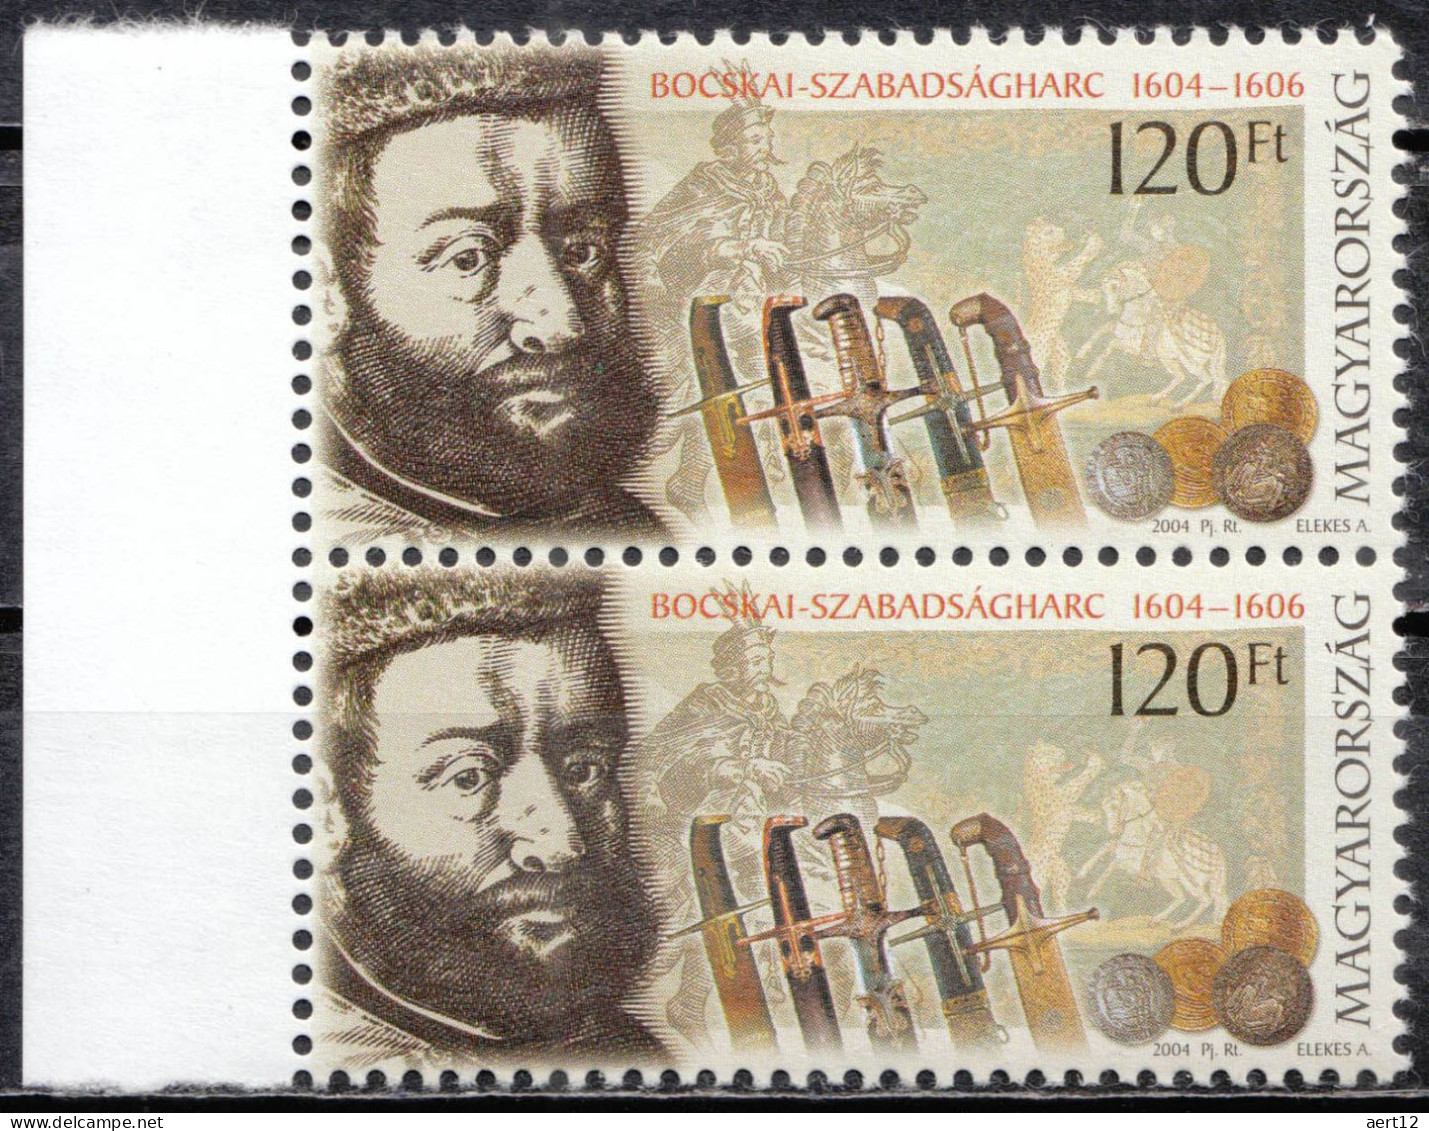 2004, Hungary, Bocskai, Anniversaries And Jubilees, Battle, Coins, Horses, 2 Stamps, MNH(**), HU 4954x2 - Ungebraucht